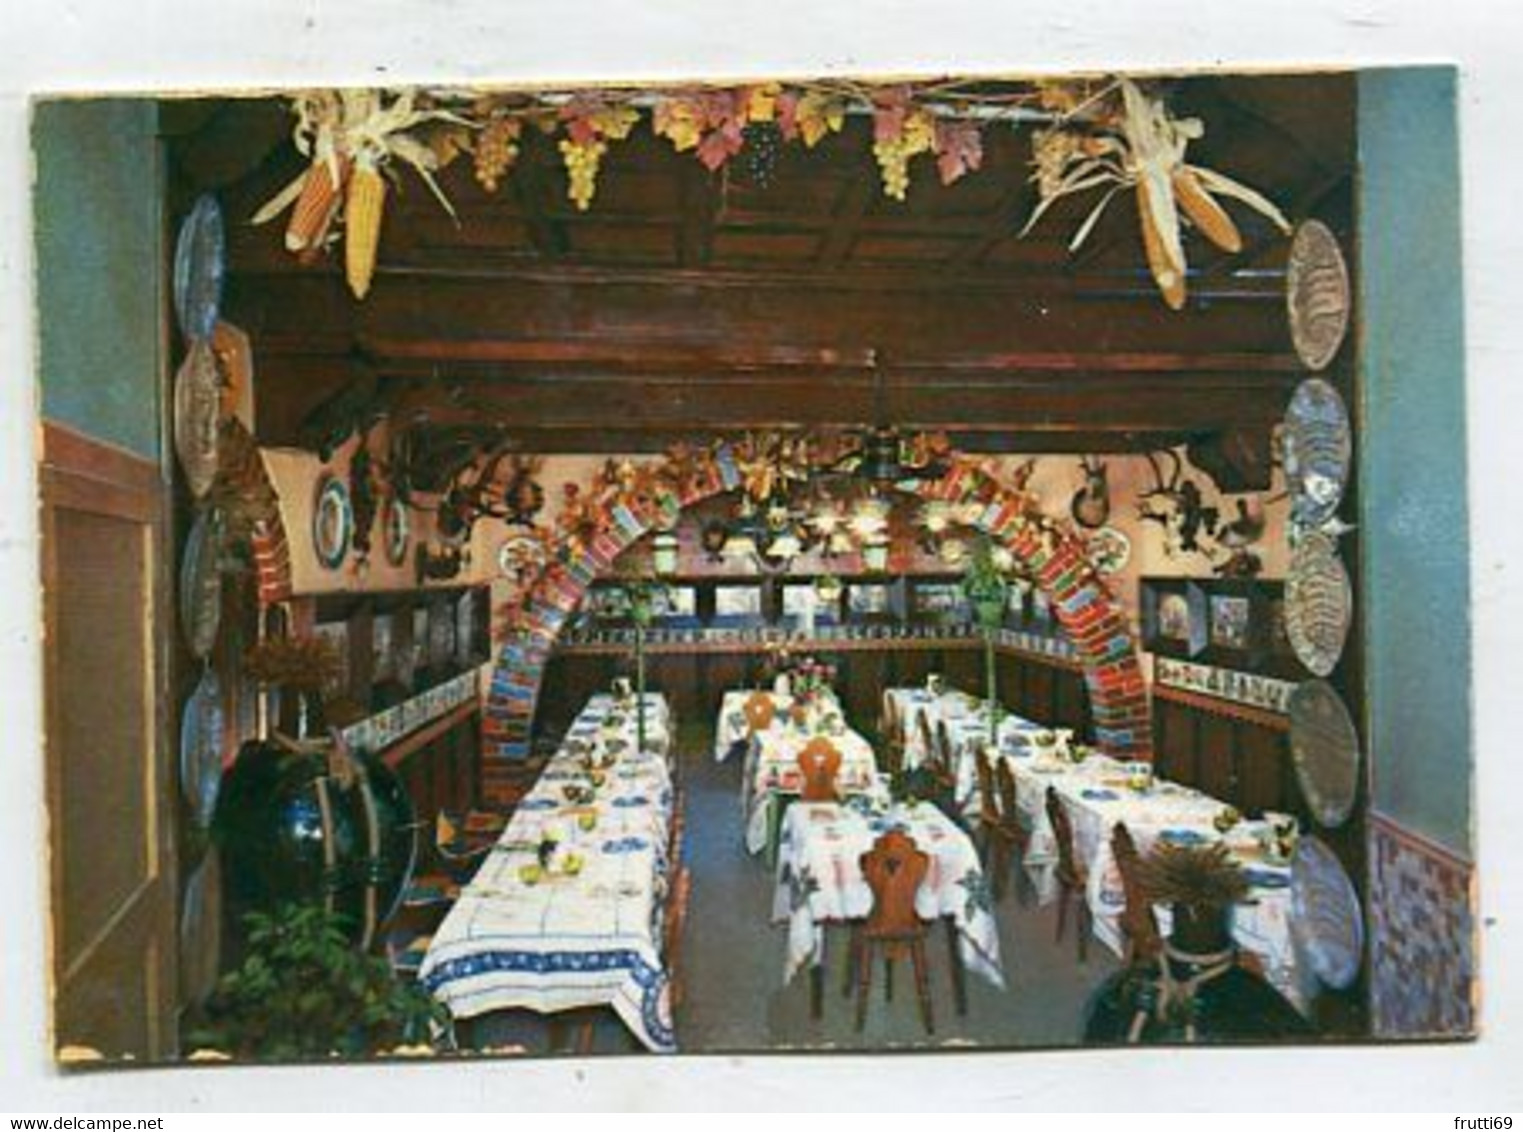 AK 115748 SAN MARINO - Taverna Da Paolino - Bar - Ristorante Tiroler Stüberl - San Marino